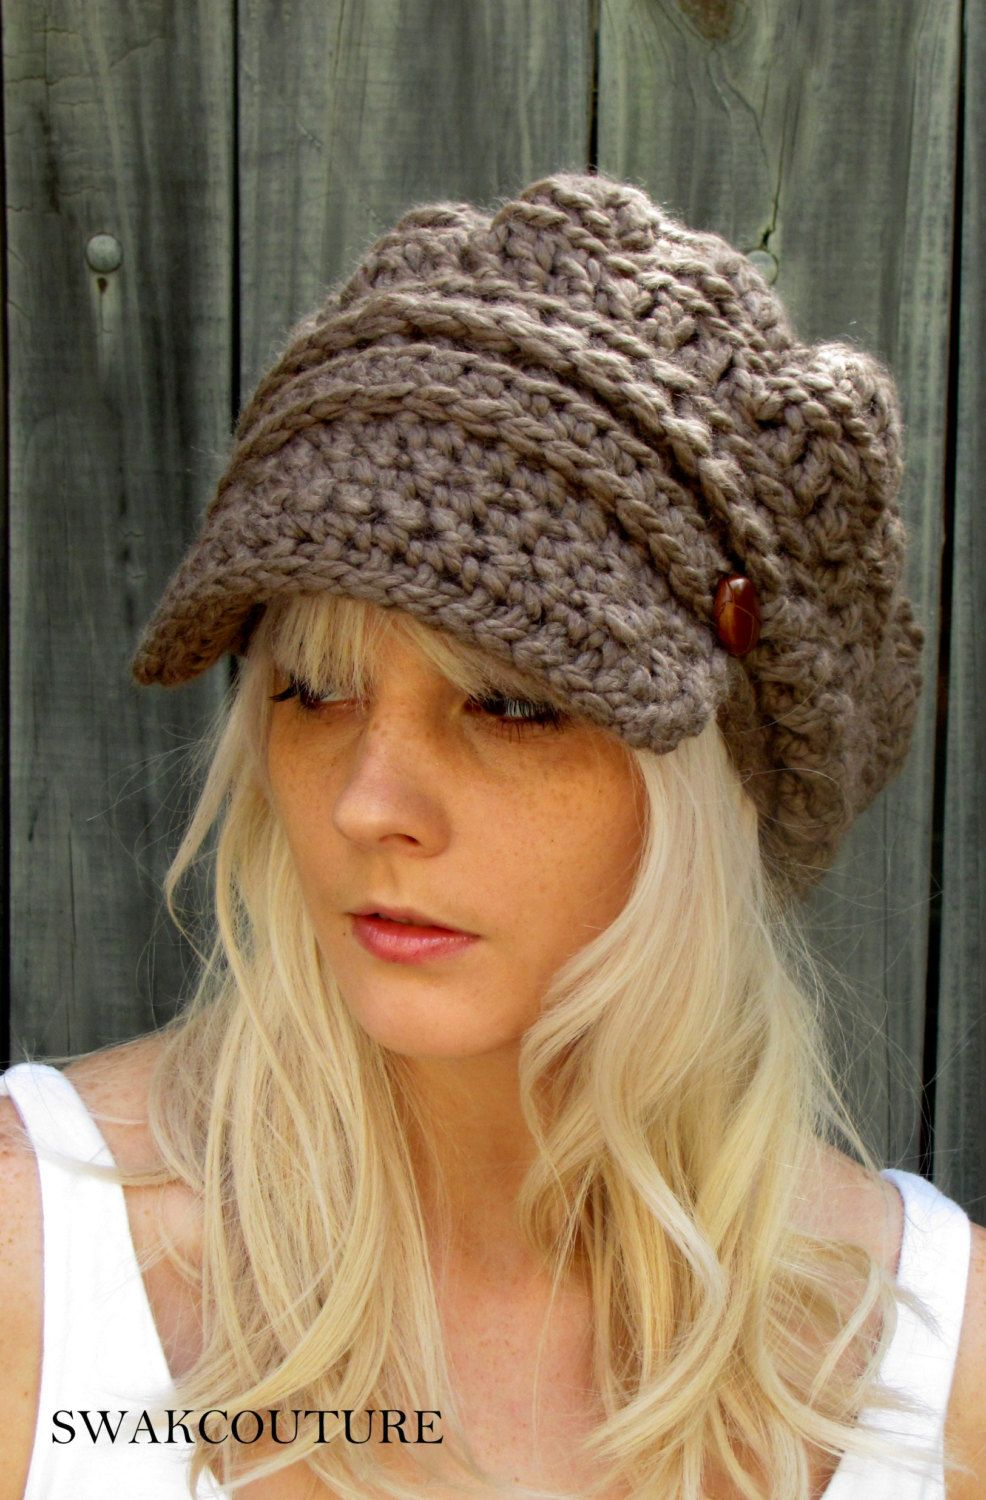 Crochet Slouchy Hat With Brim Pattern Crochet Slouchy Hat With Brim Pattern Popular Items For Crochet